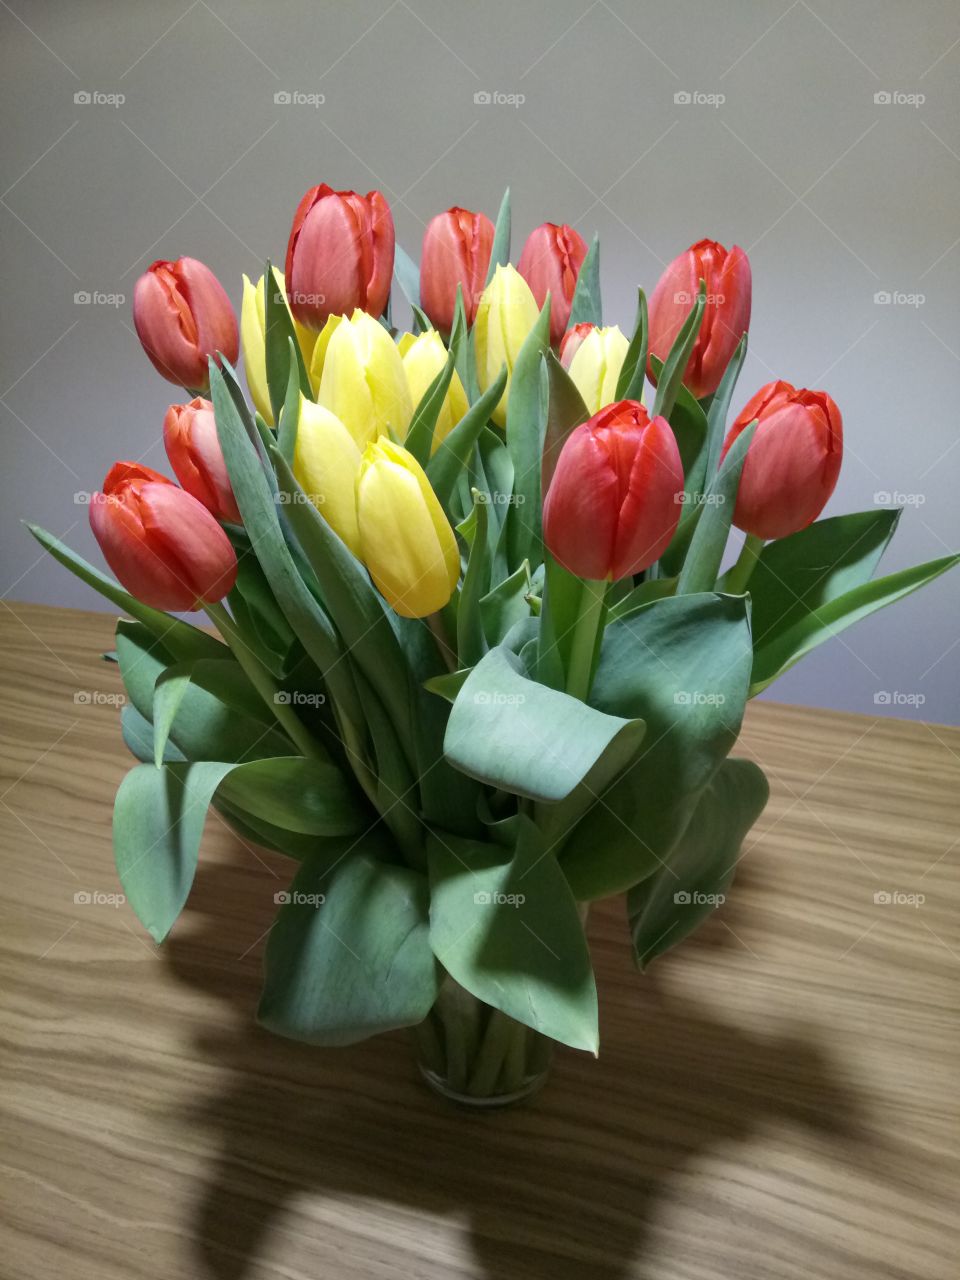 Flowers, tulip 2